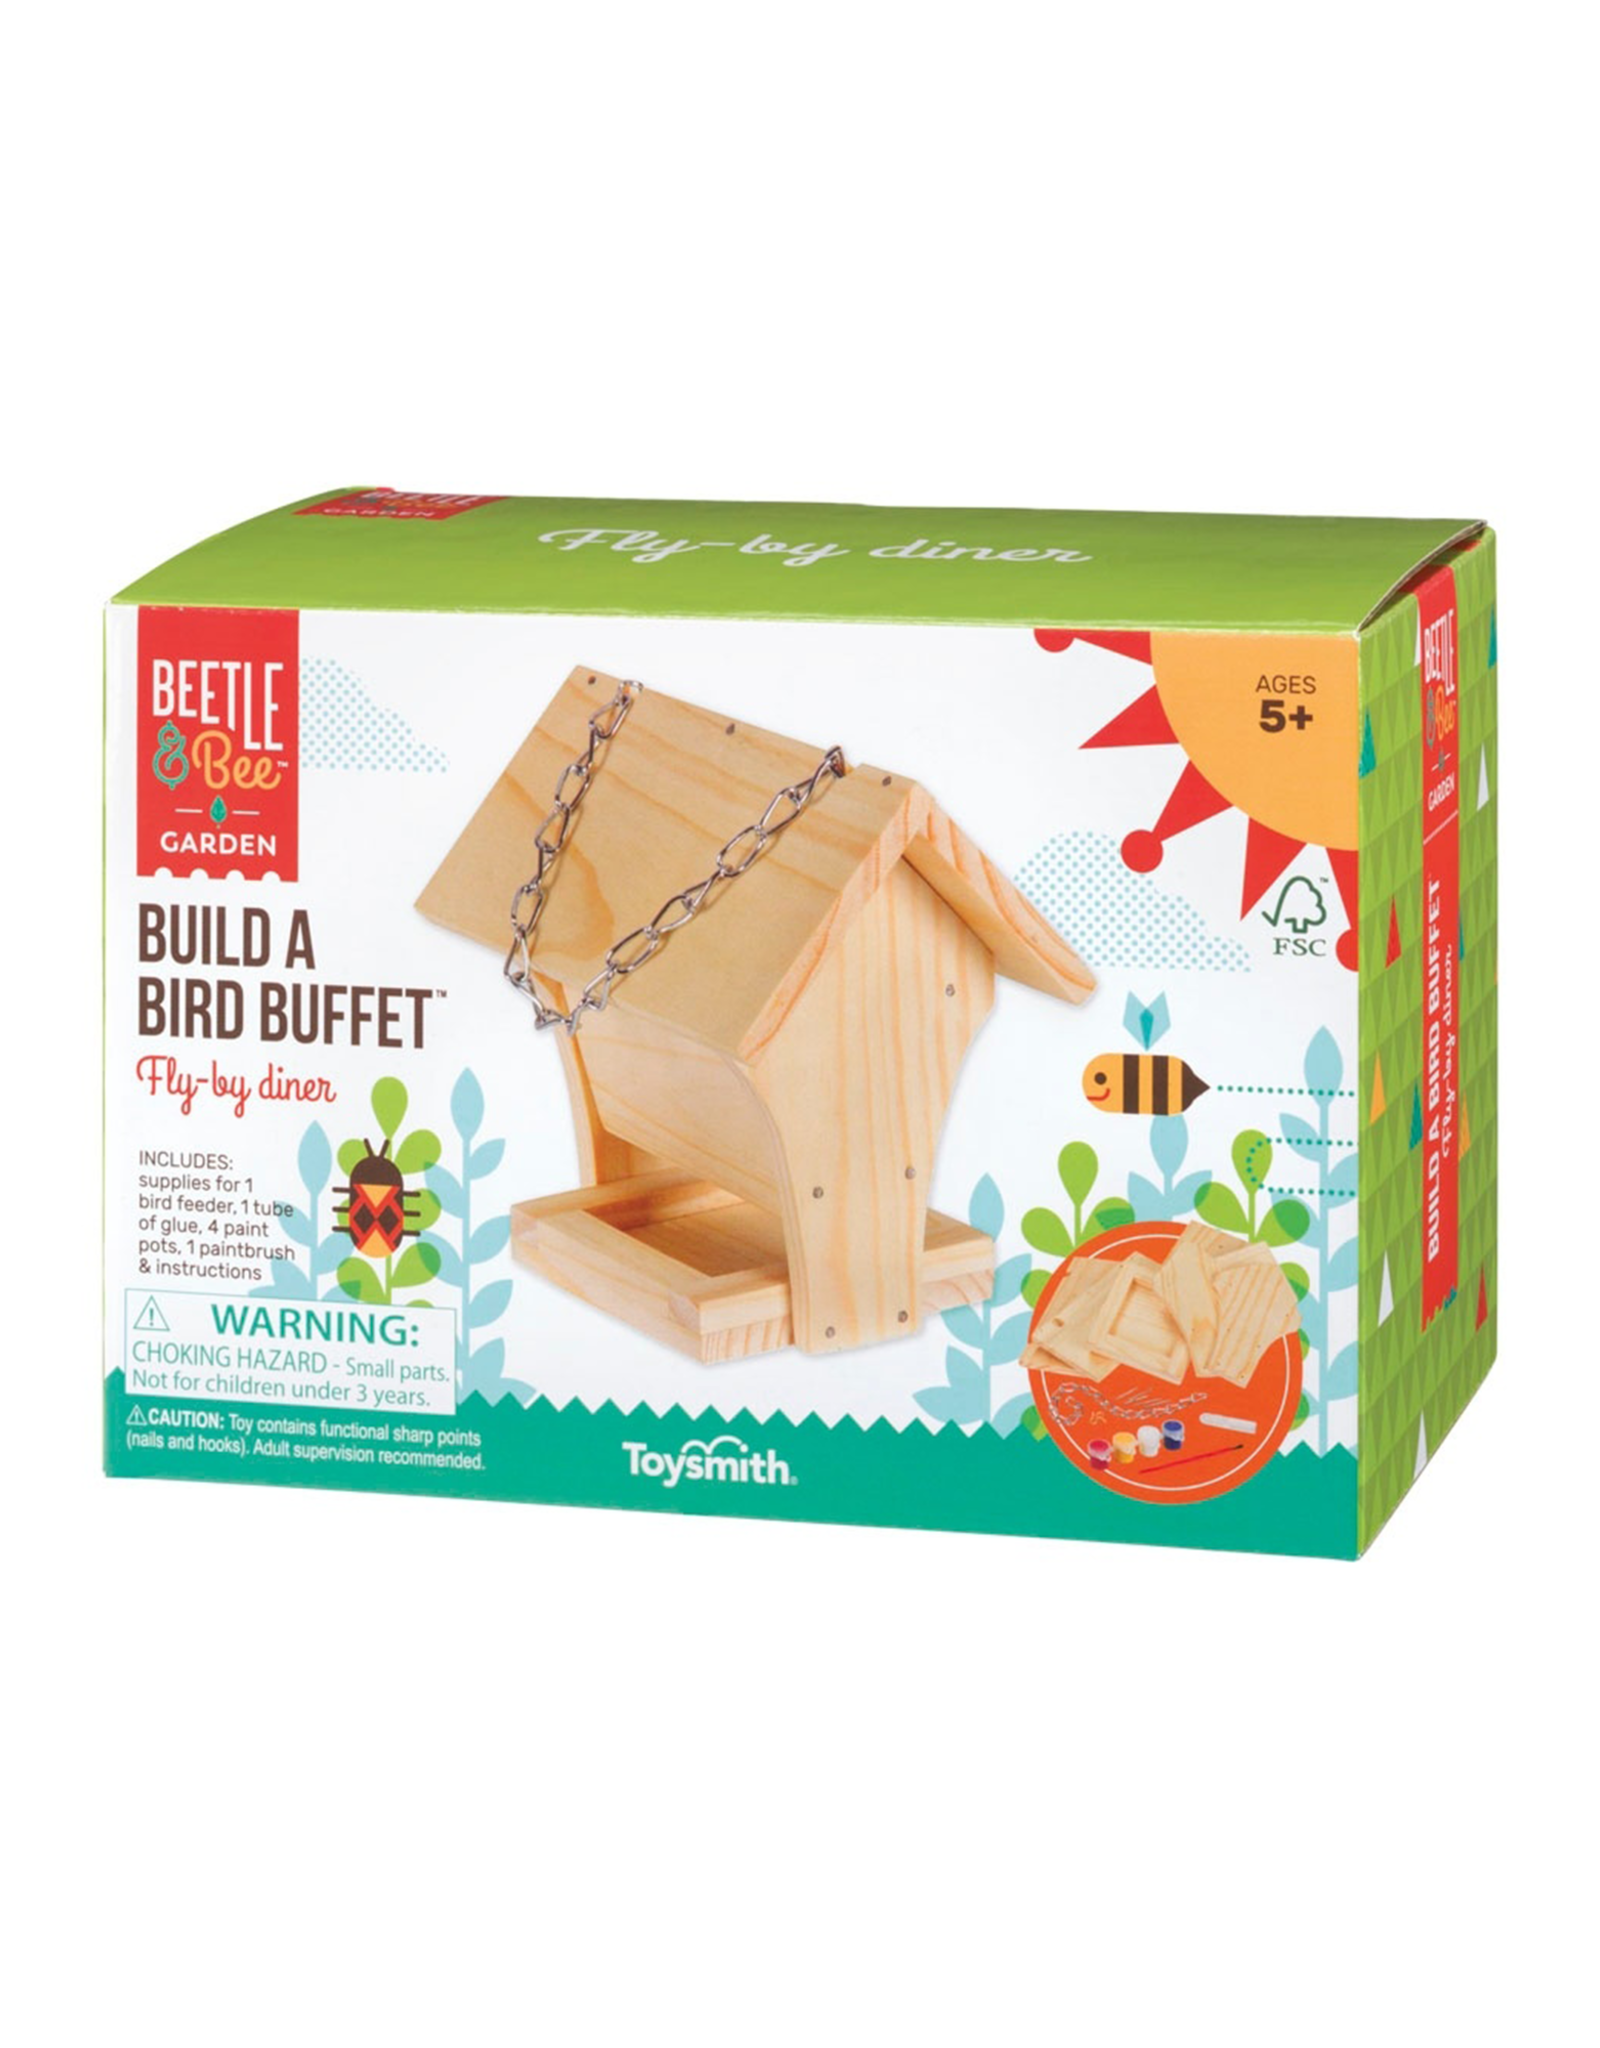 Toysmith Beetle & Bee Build a Bird Buffet